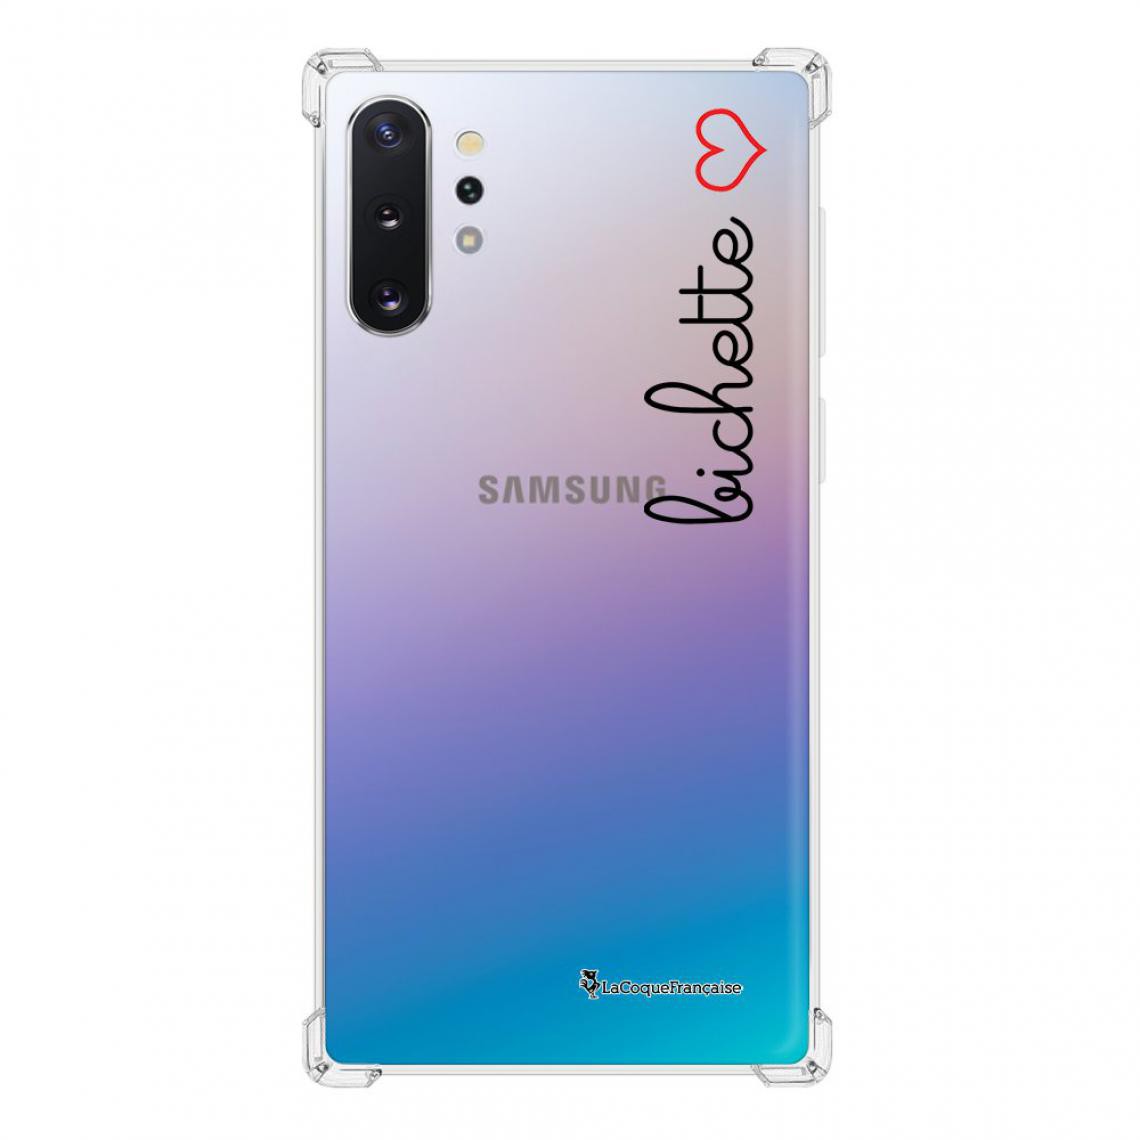 La Coque Francaise - Coque Samsung Galaxy Note 10 Plus silicone anti-choc souple angles renforcés transparente - Coque, étui smartphone